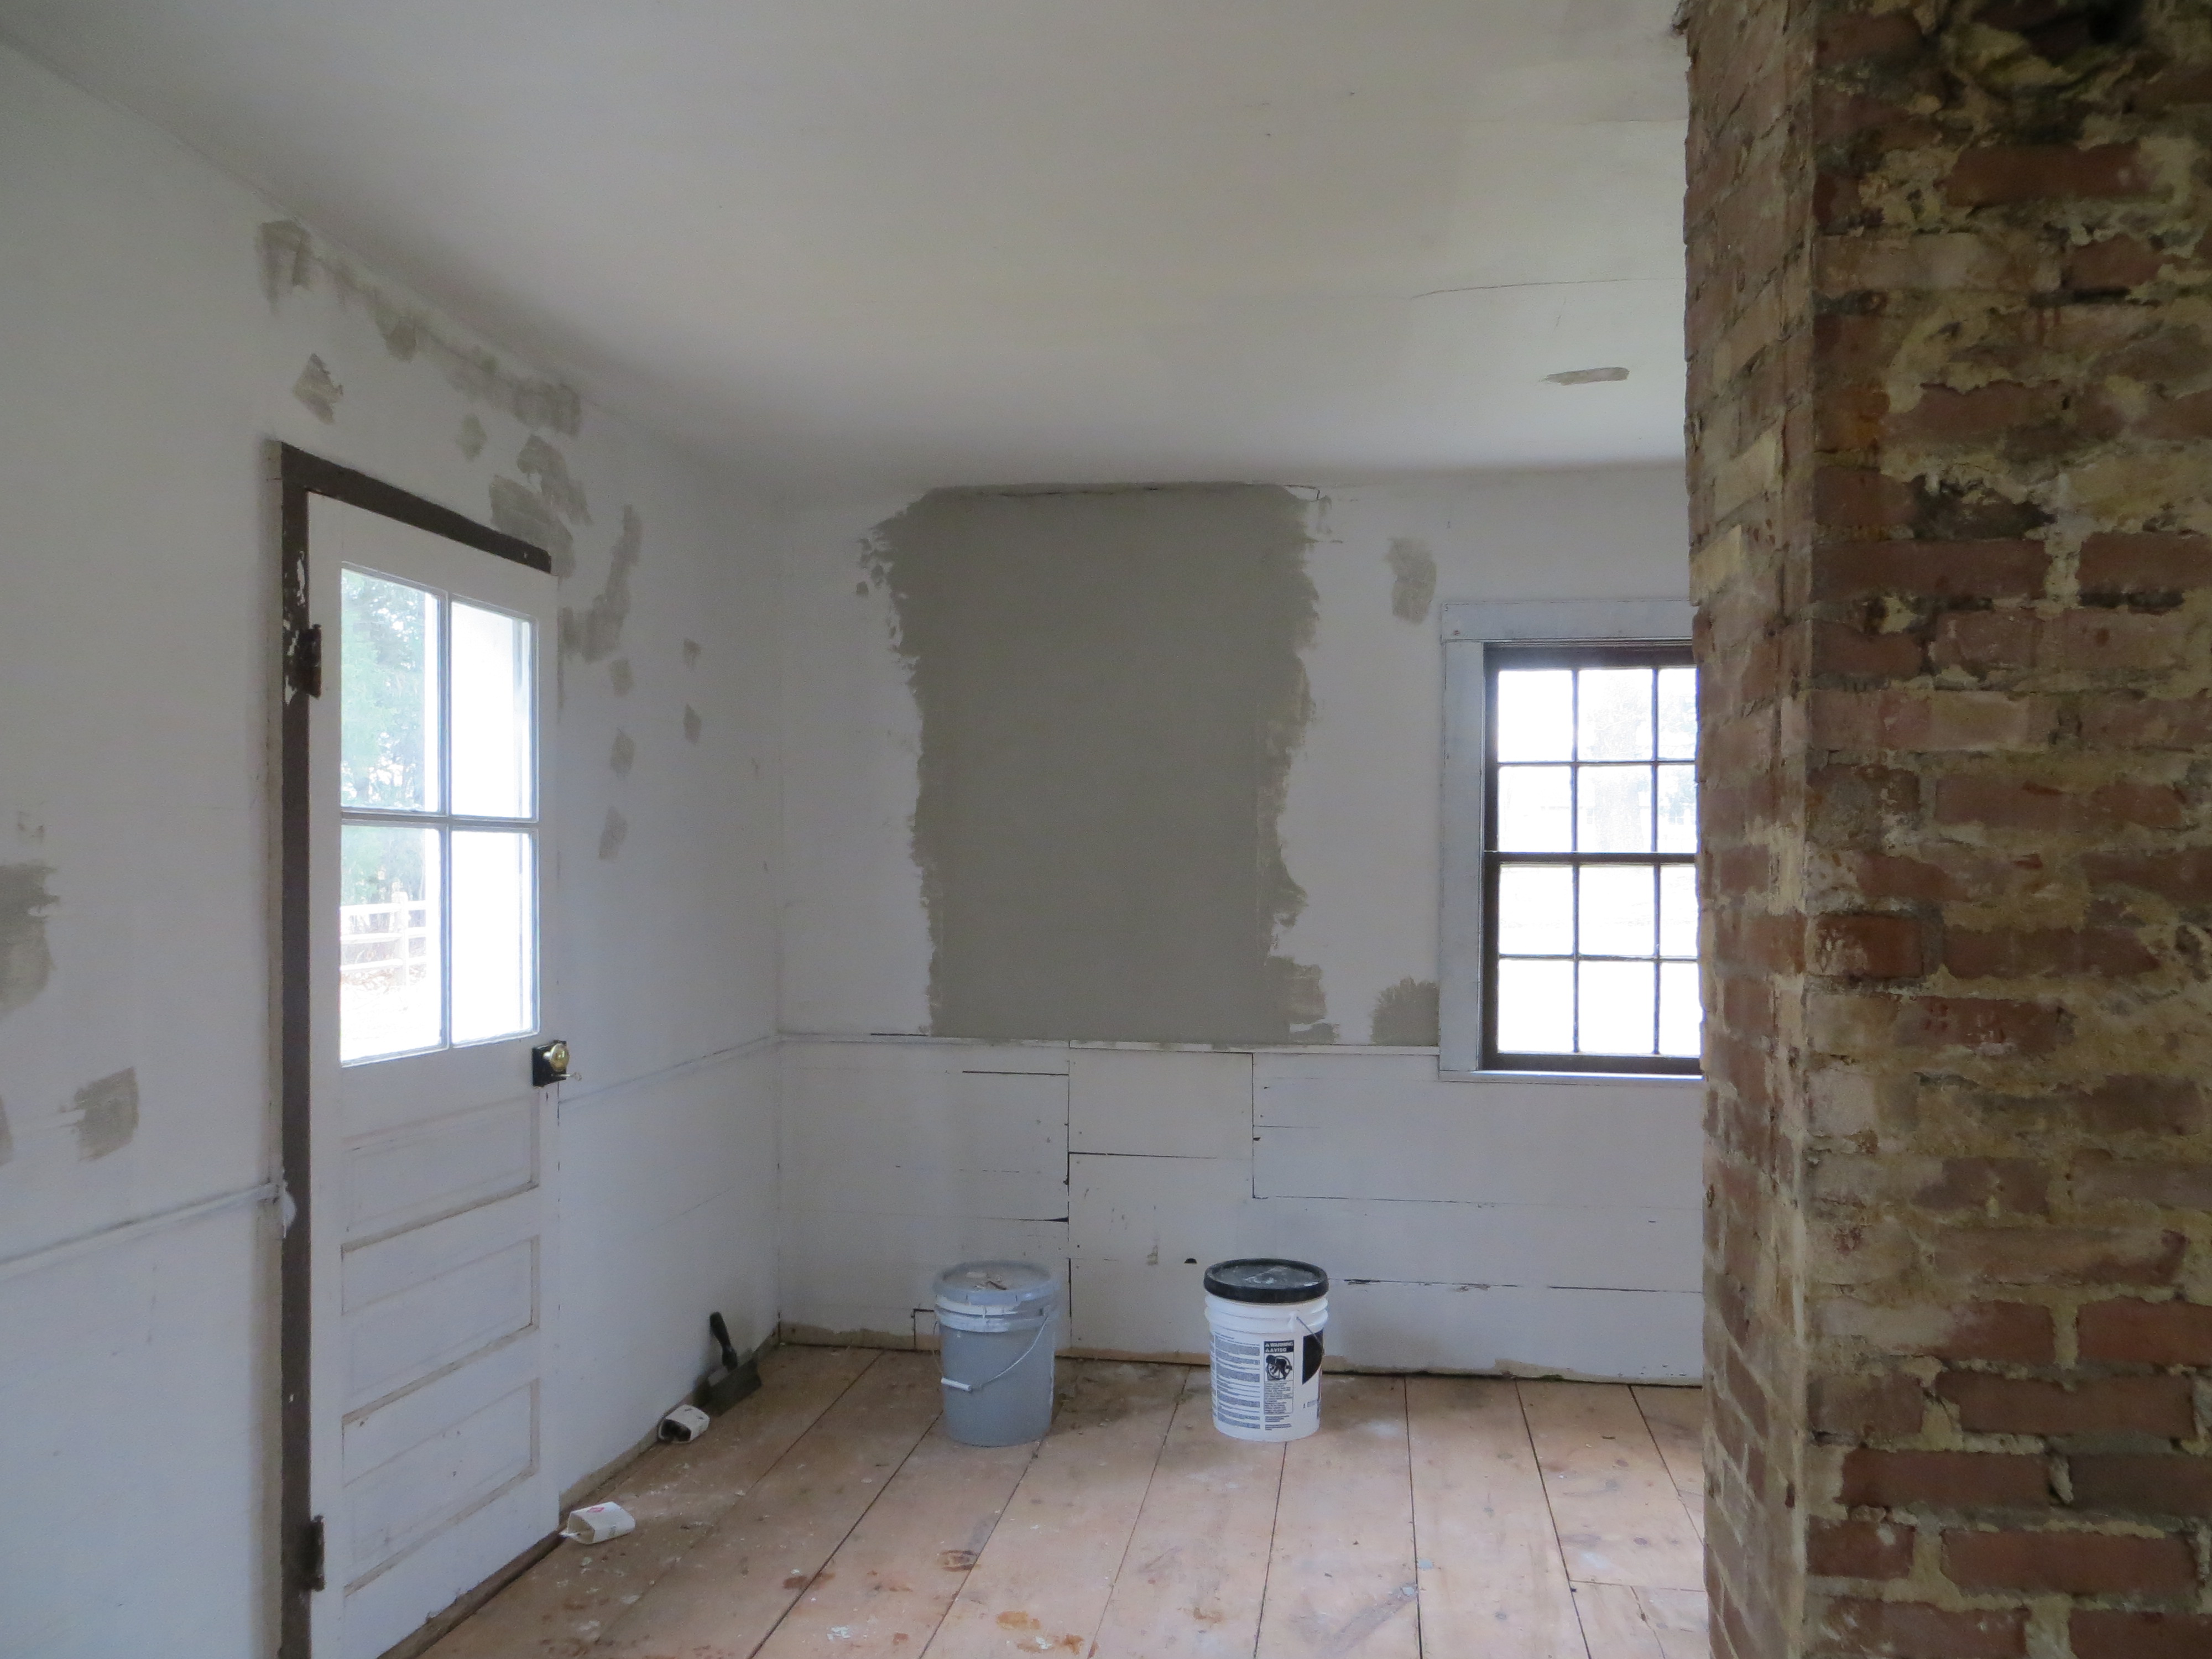 interior,  first floor wall repair 12-20-13